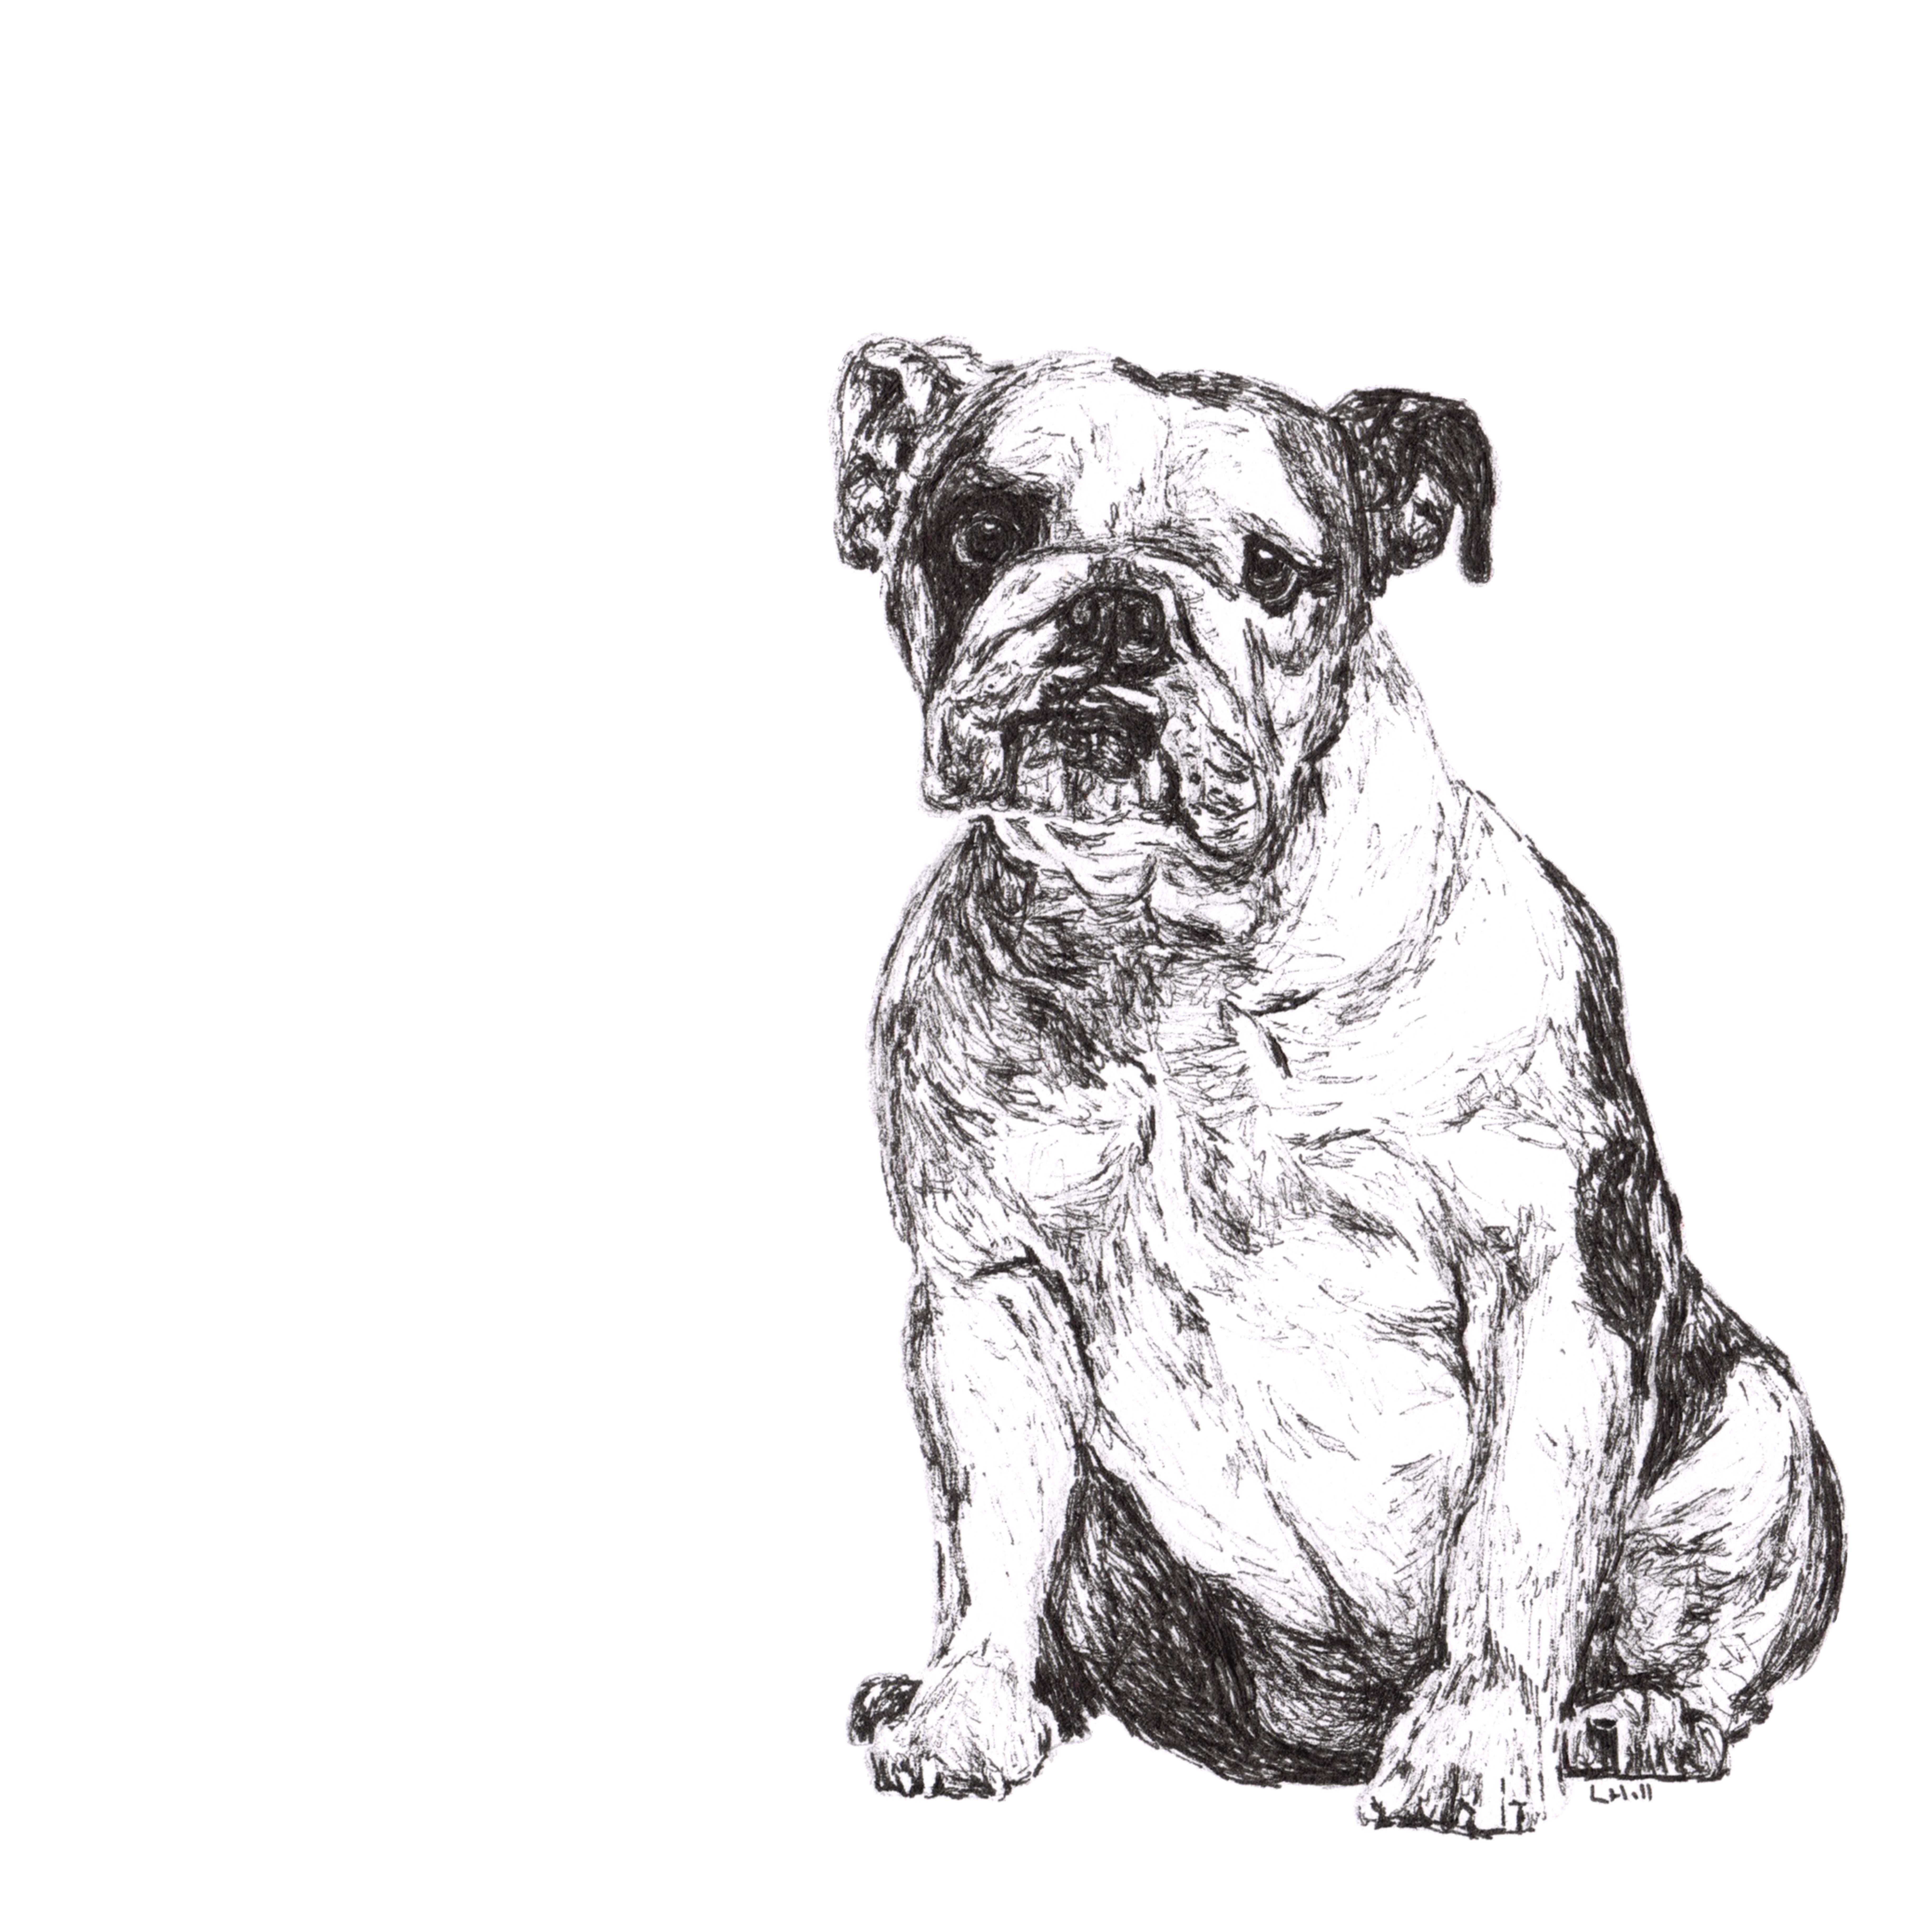 English Bulldog pen and ink illustration by Louisa Hill